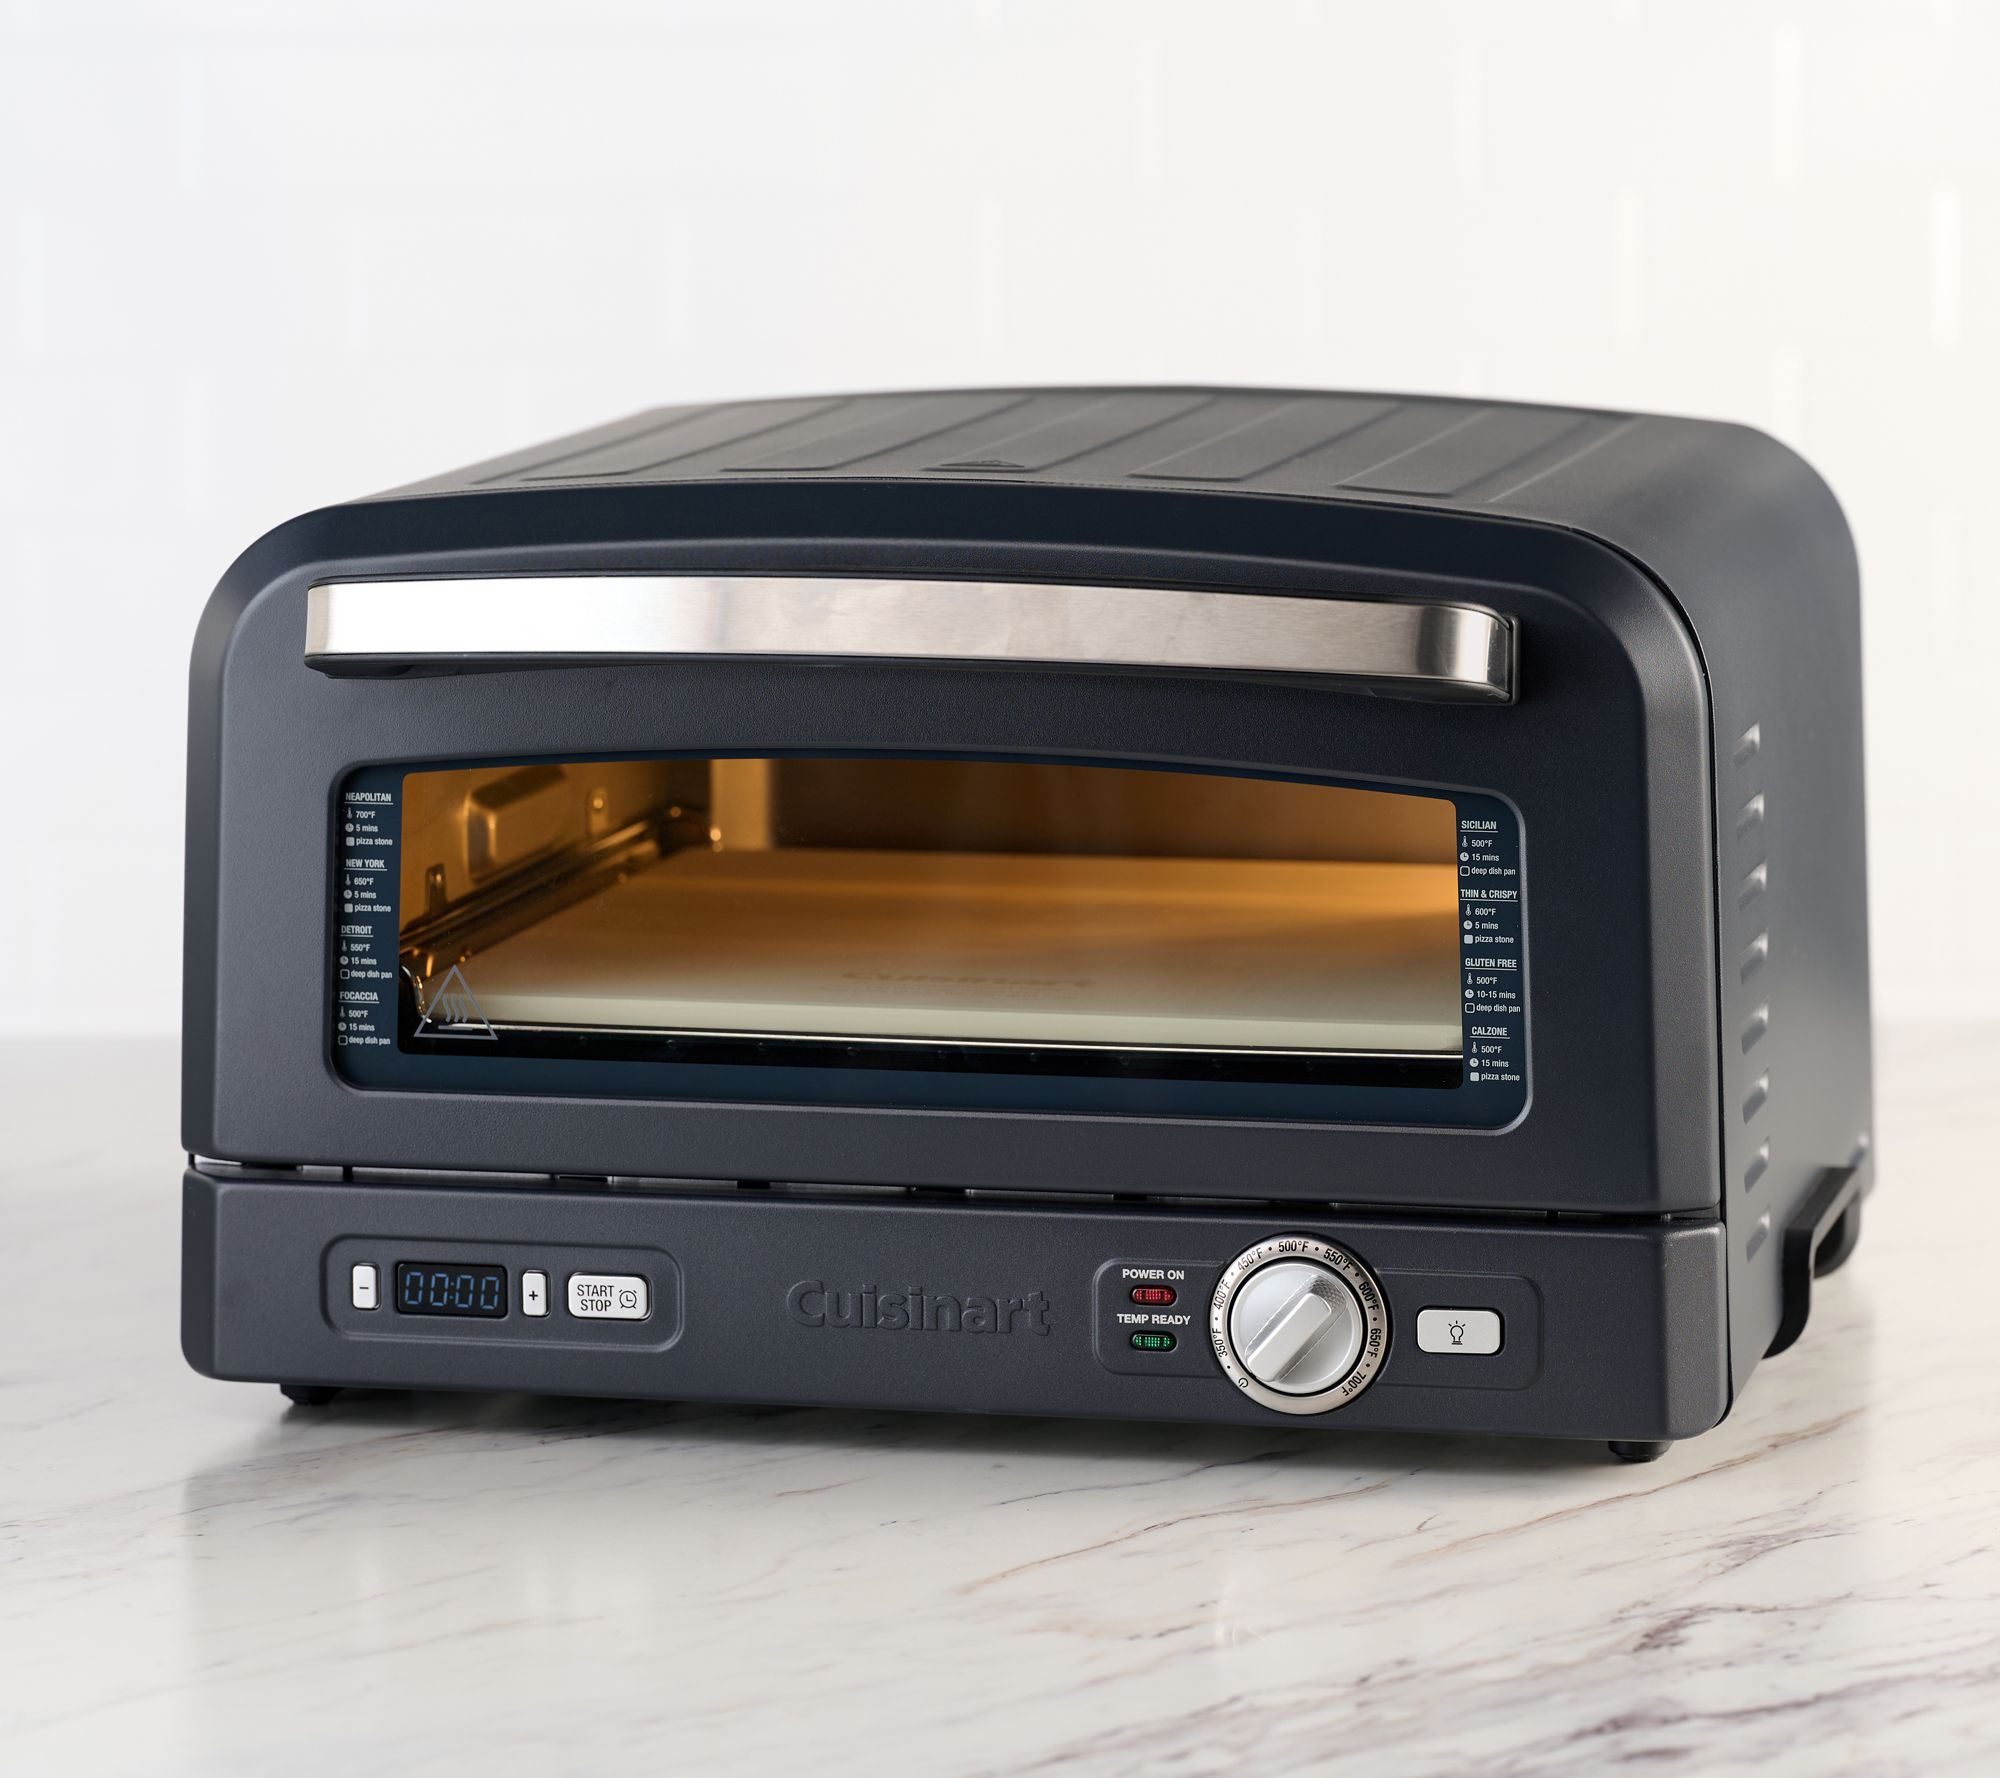 Cuisinart Microwave Steamer - Green